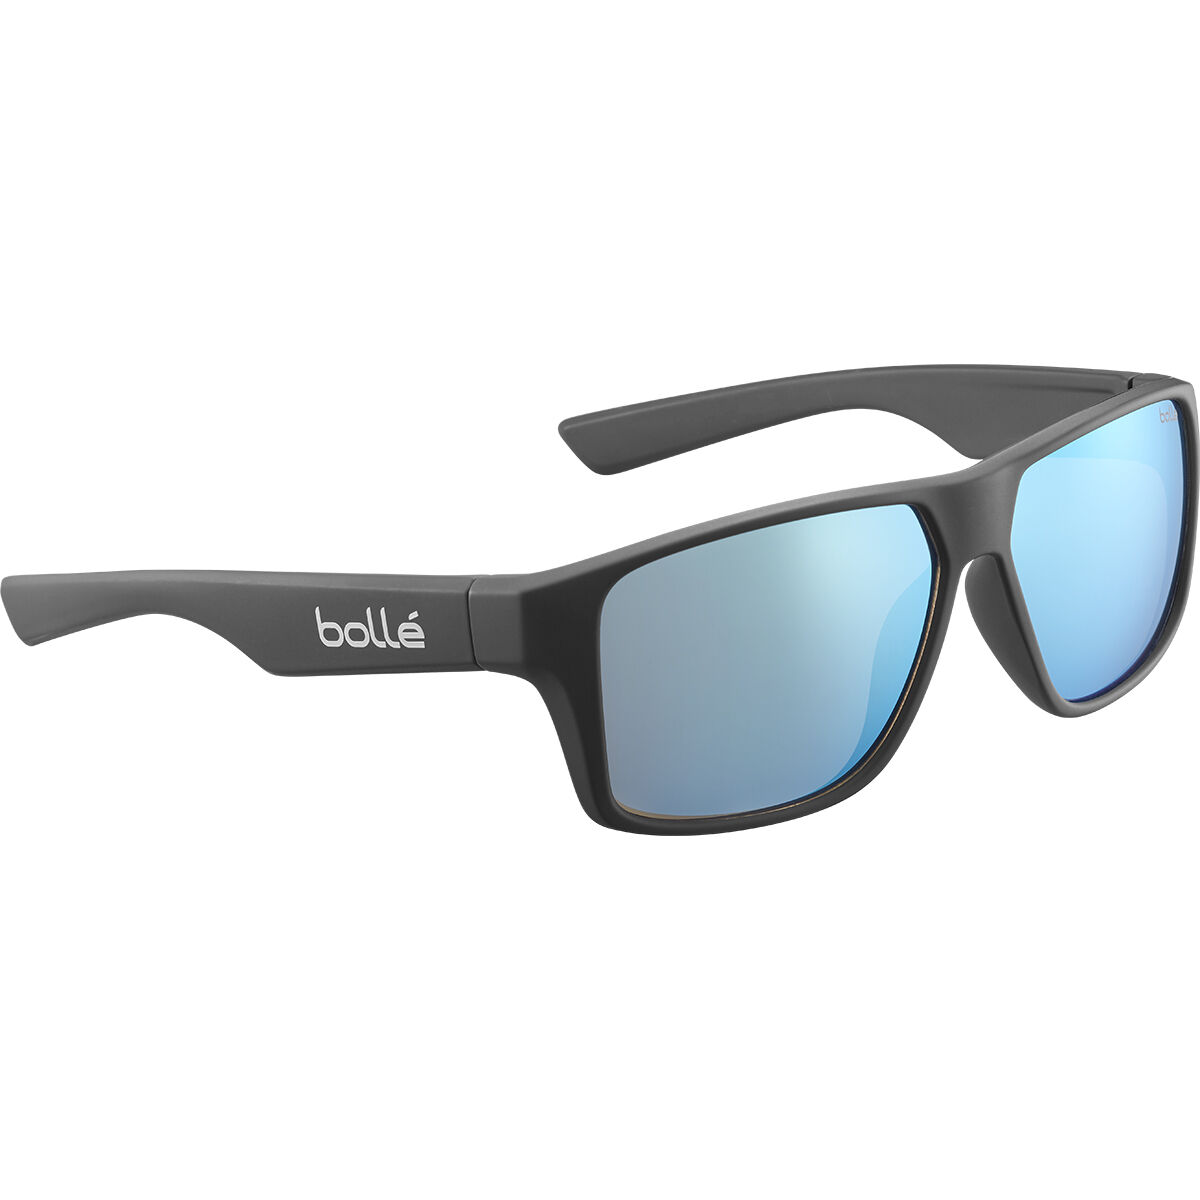 Bollé BRECKEN Sport Lifestyle Sunglasses - Polarized Lenses Outlet